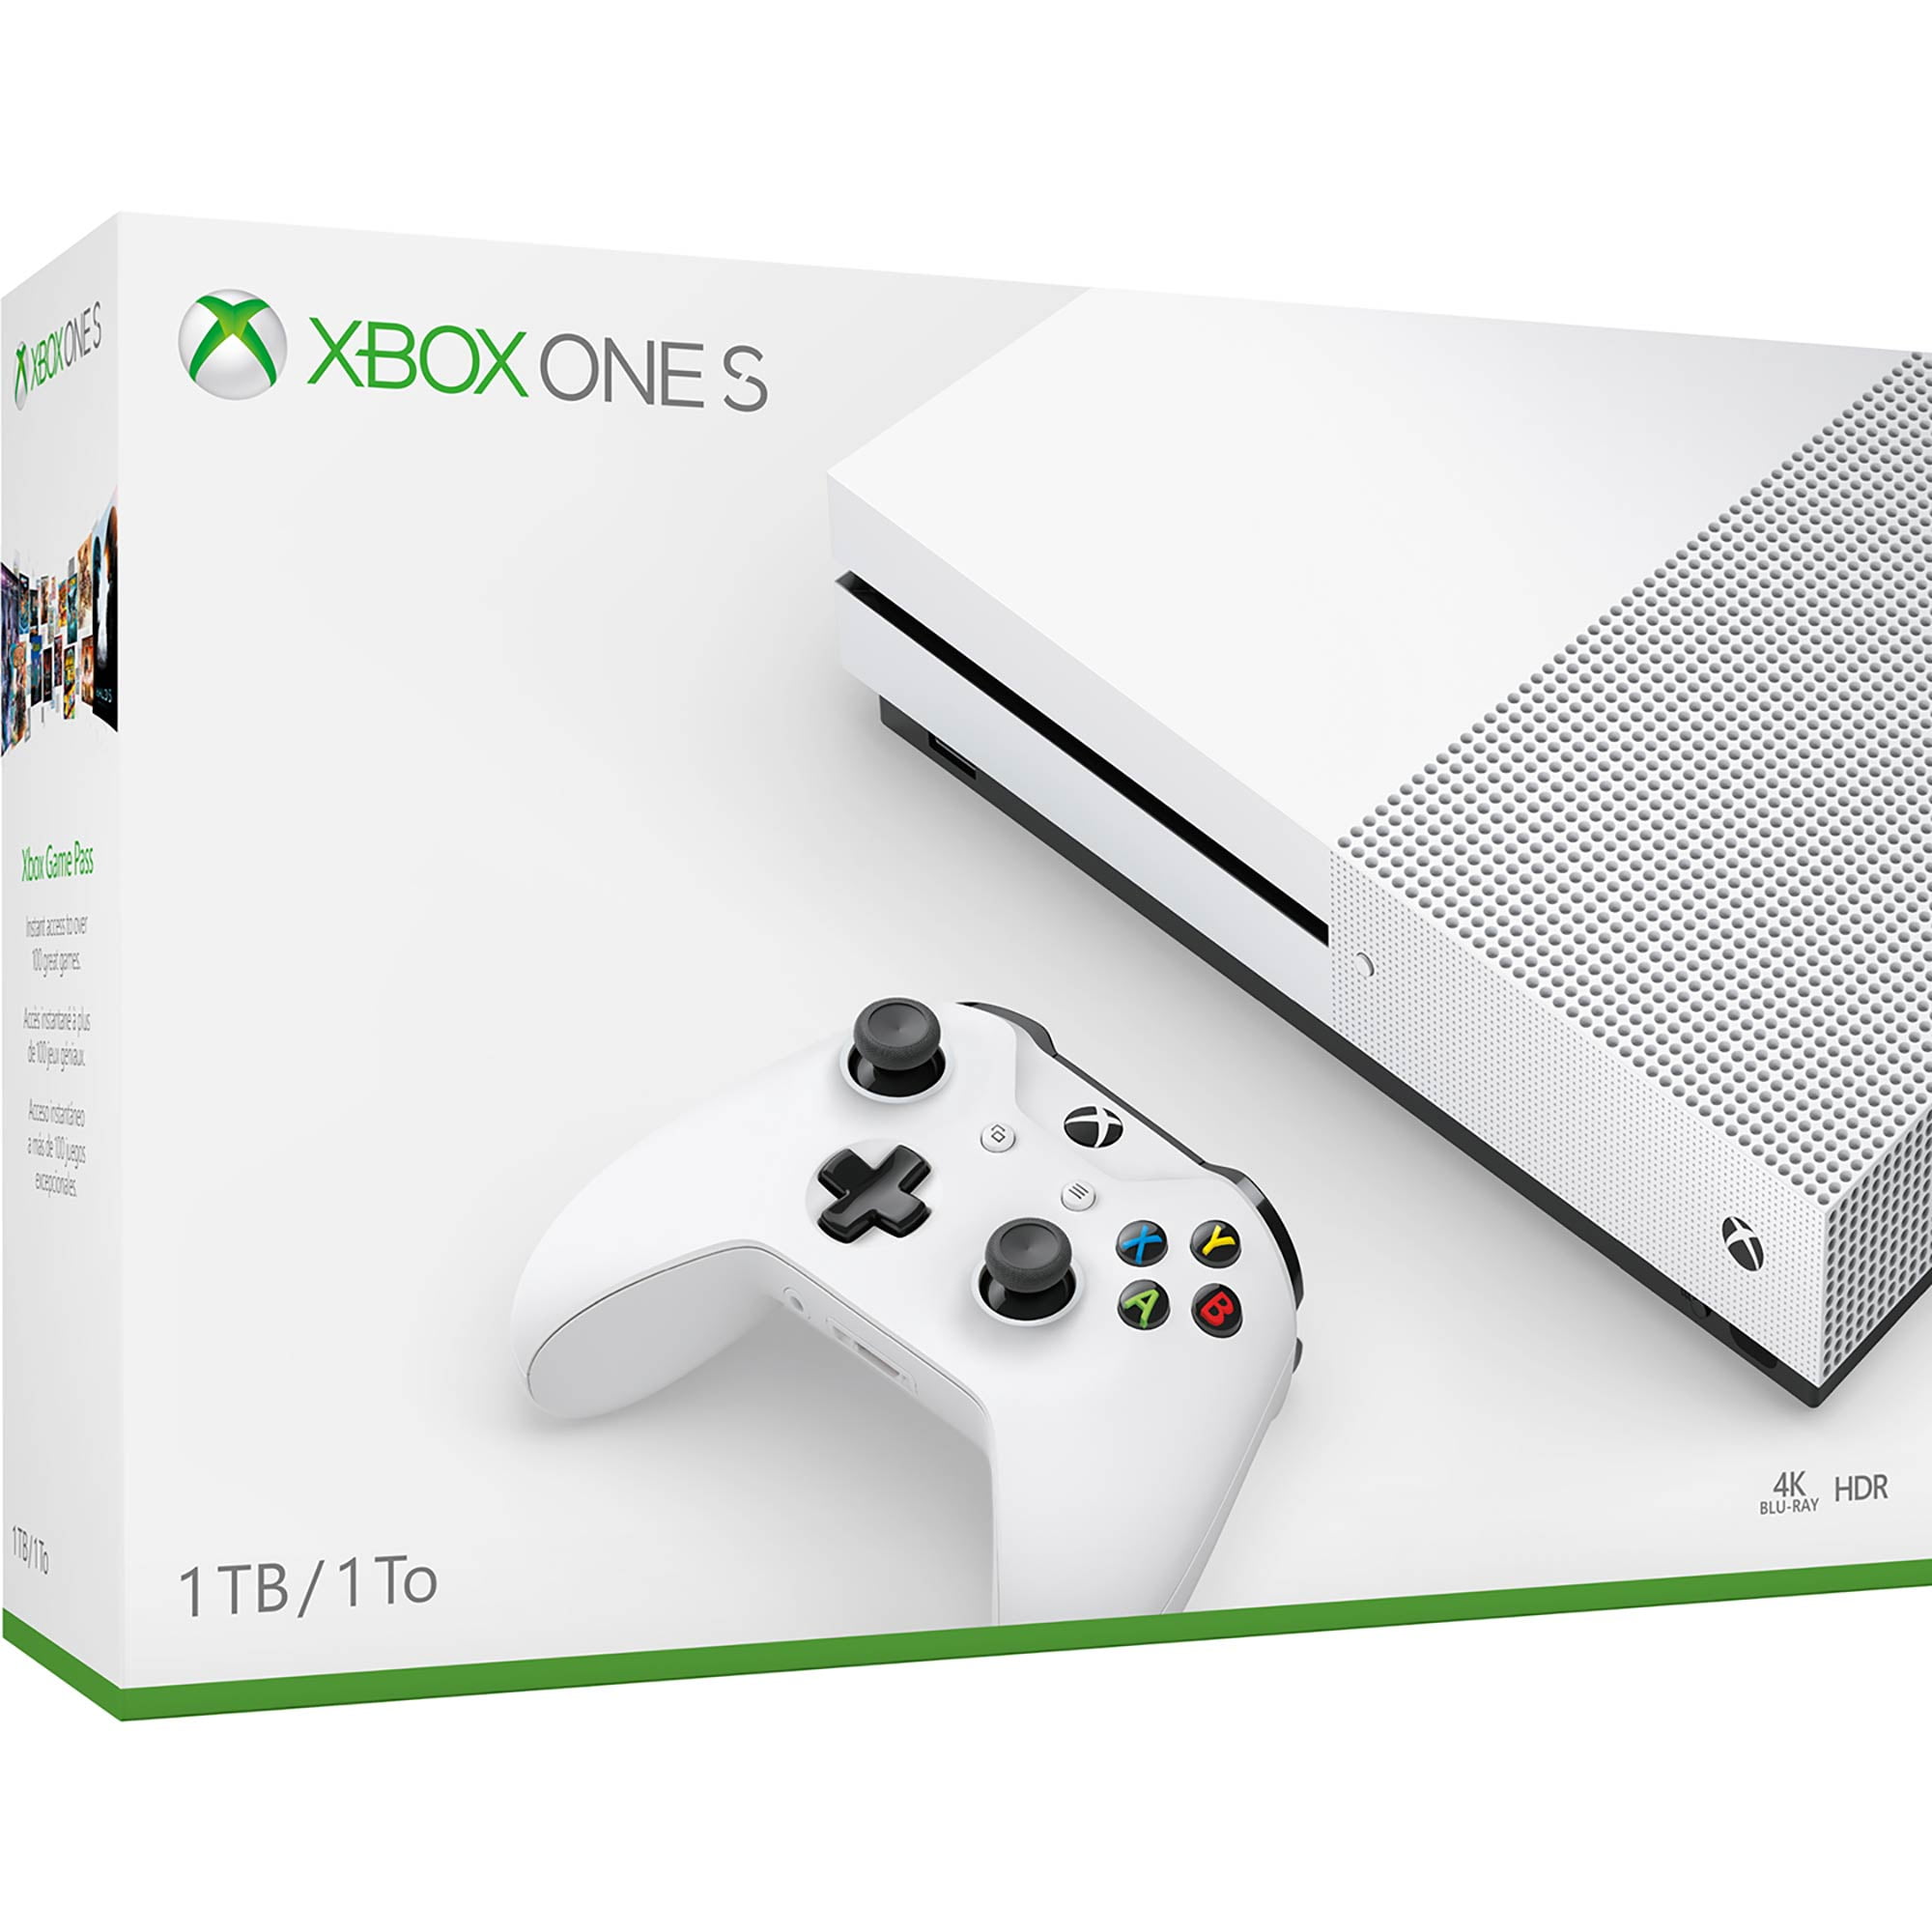 Ooze Expensive Harmony Microsoft Xbox One S 1TB Console, White, 234-01249 - Walmart.com